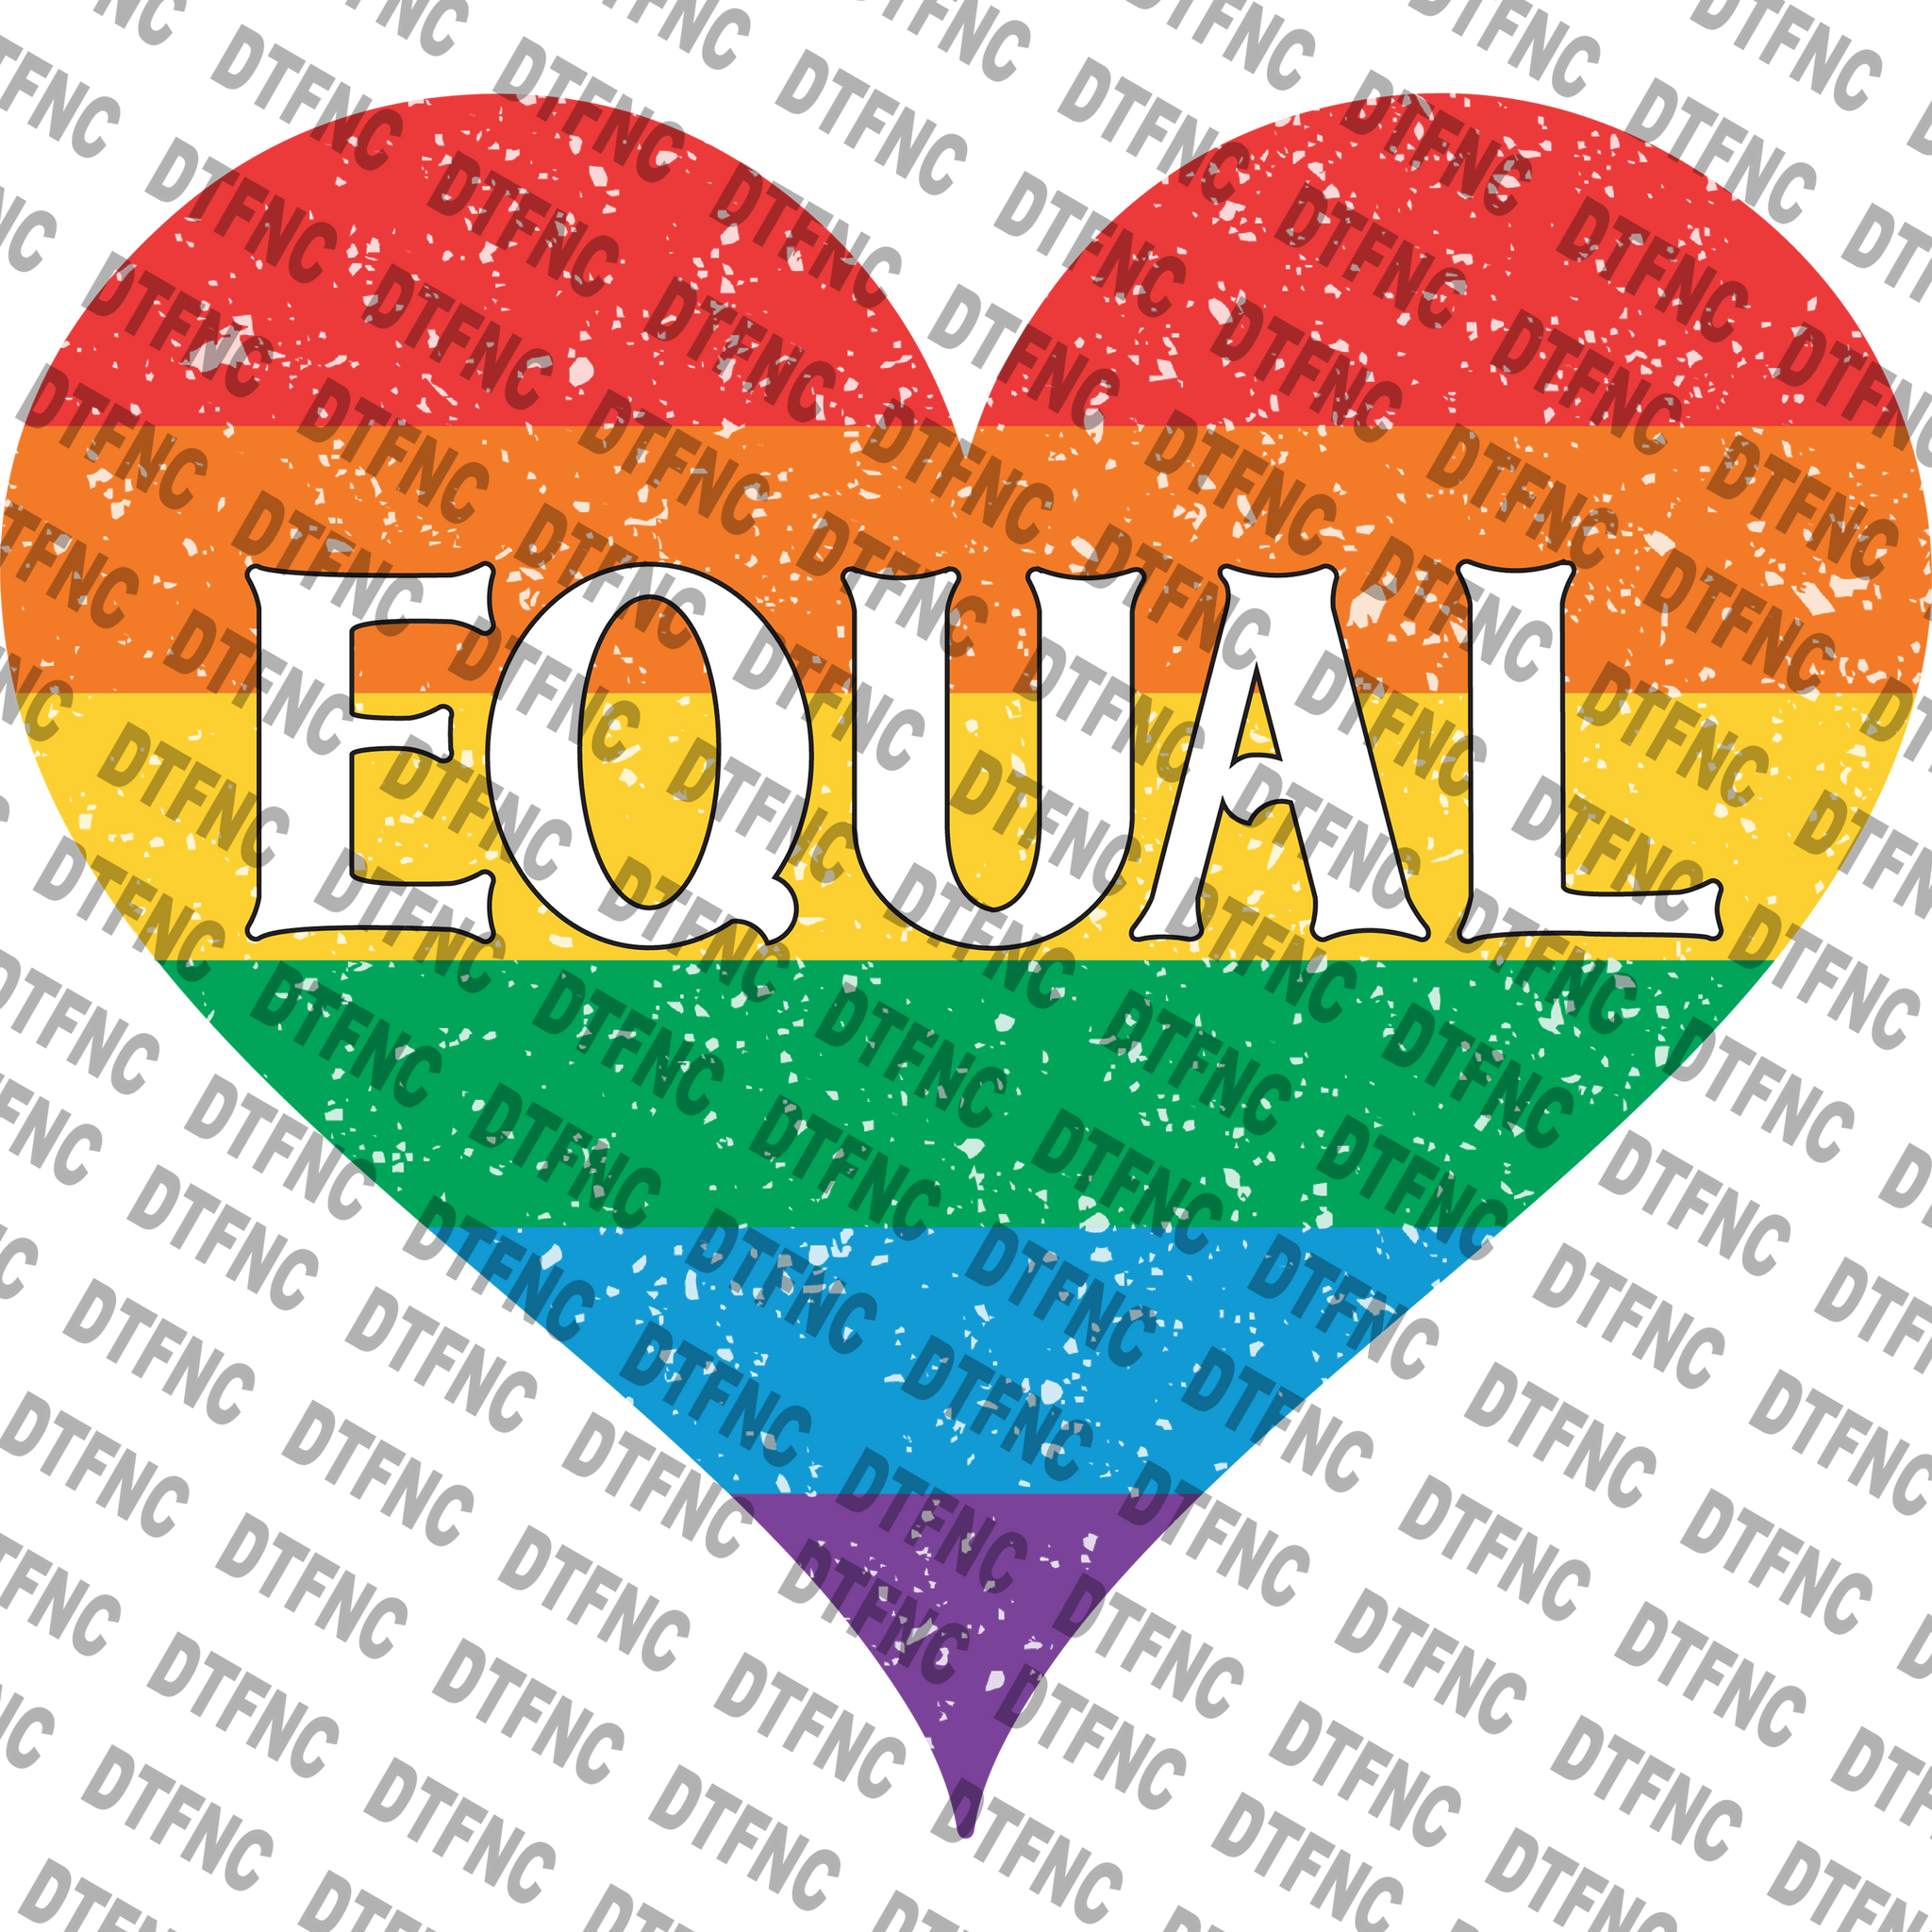 LGBTQ - Equal